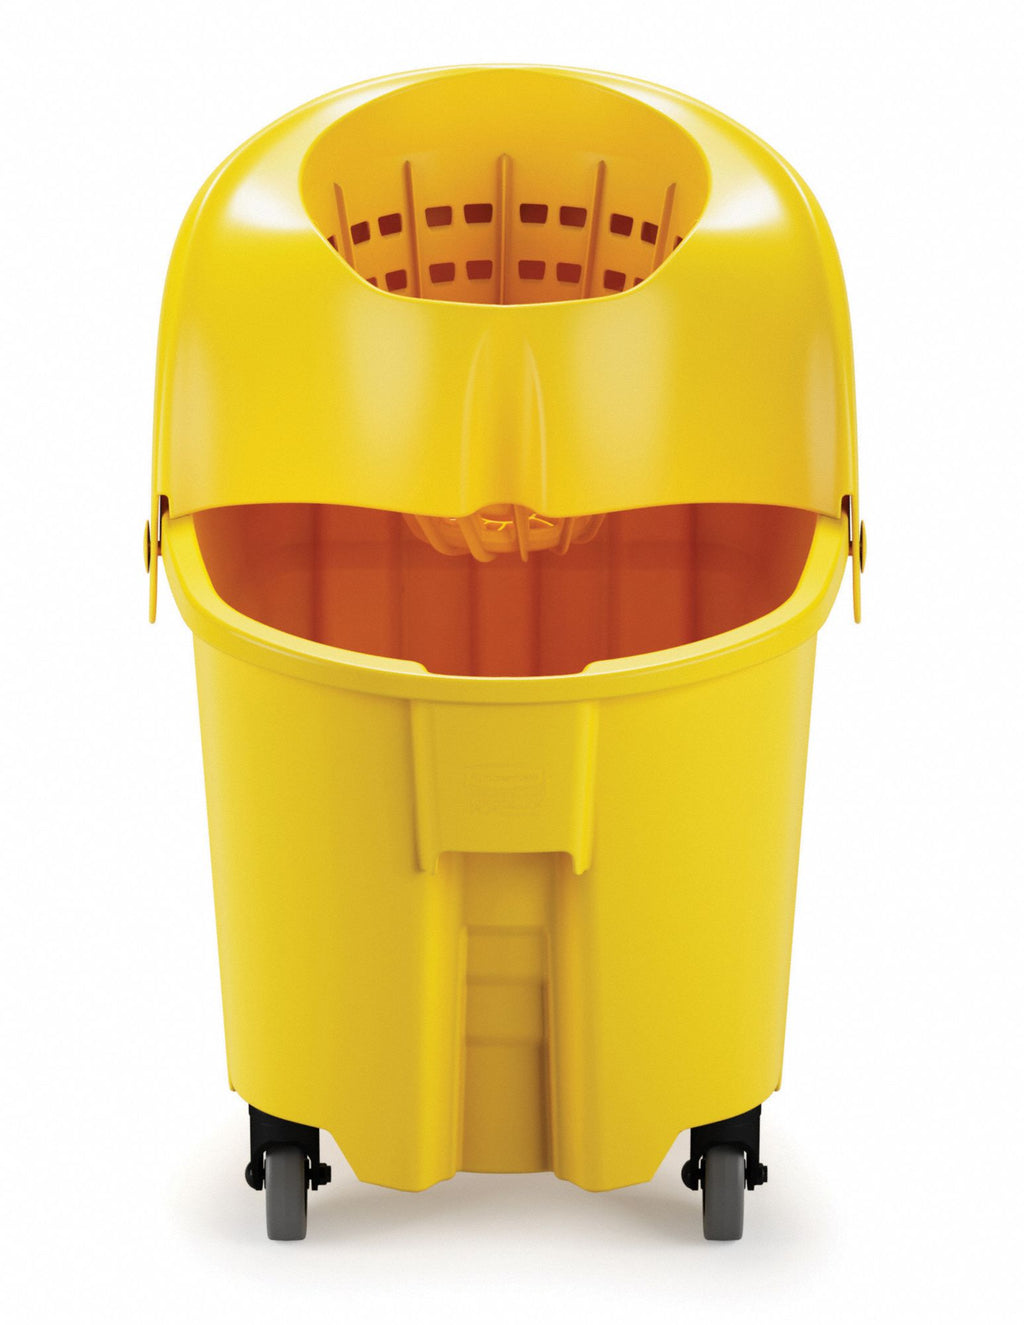 Rubbermaid Yellow Polypropylene Mop Bucket and Wringer, 8-3/4 gal.